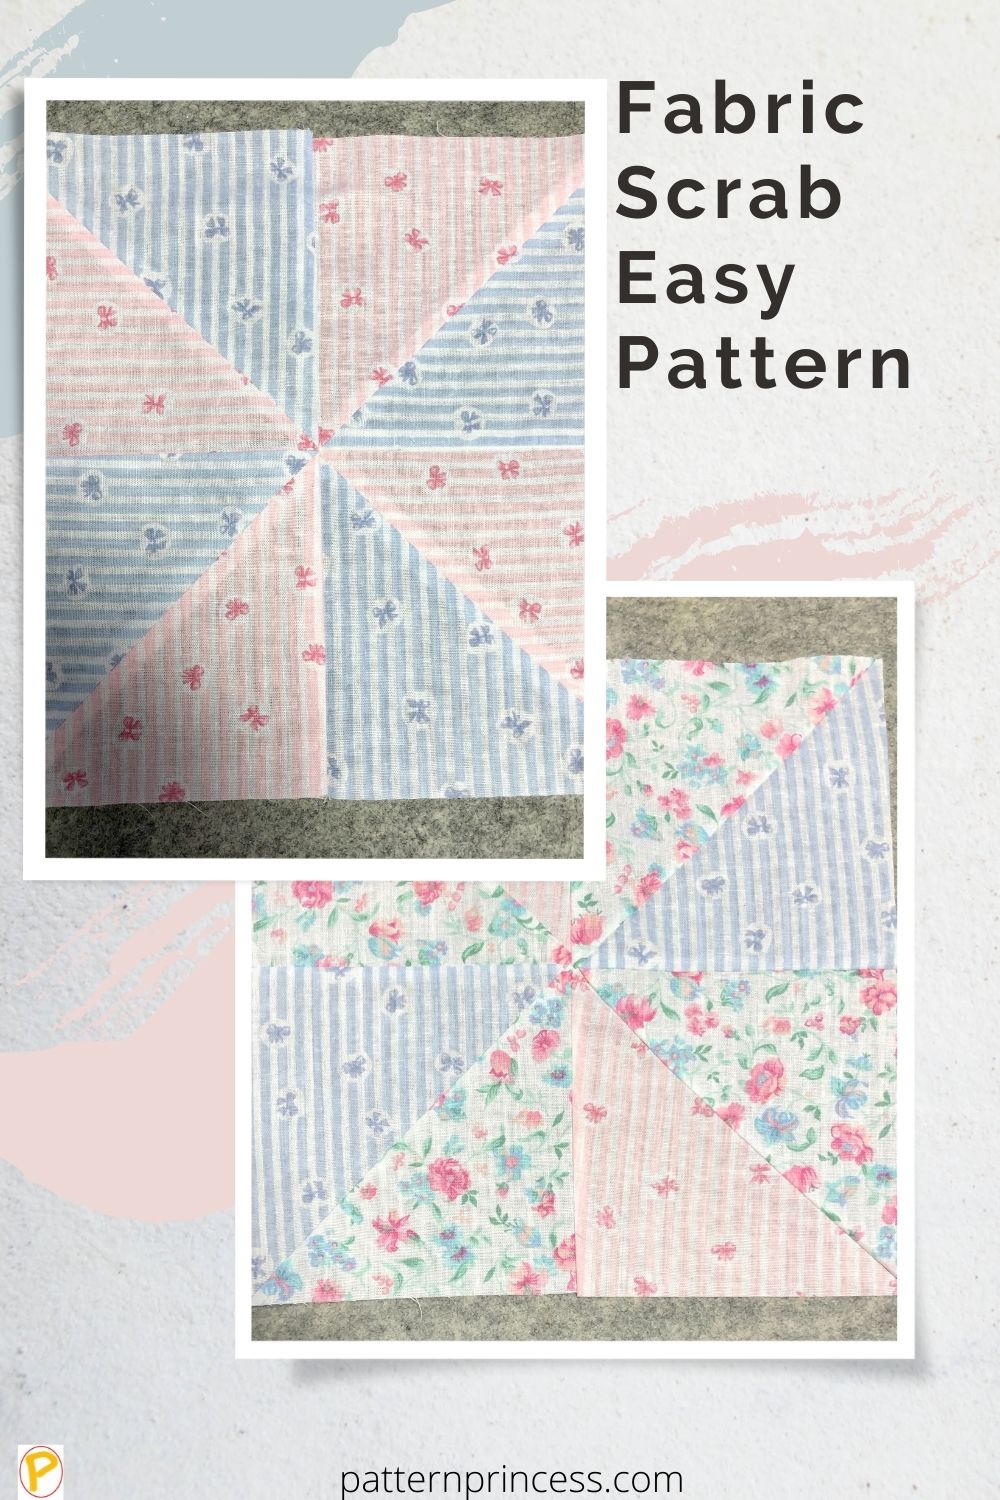 Fabric Scrab Easy Pattern